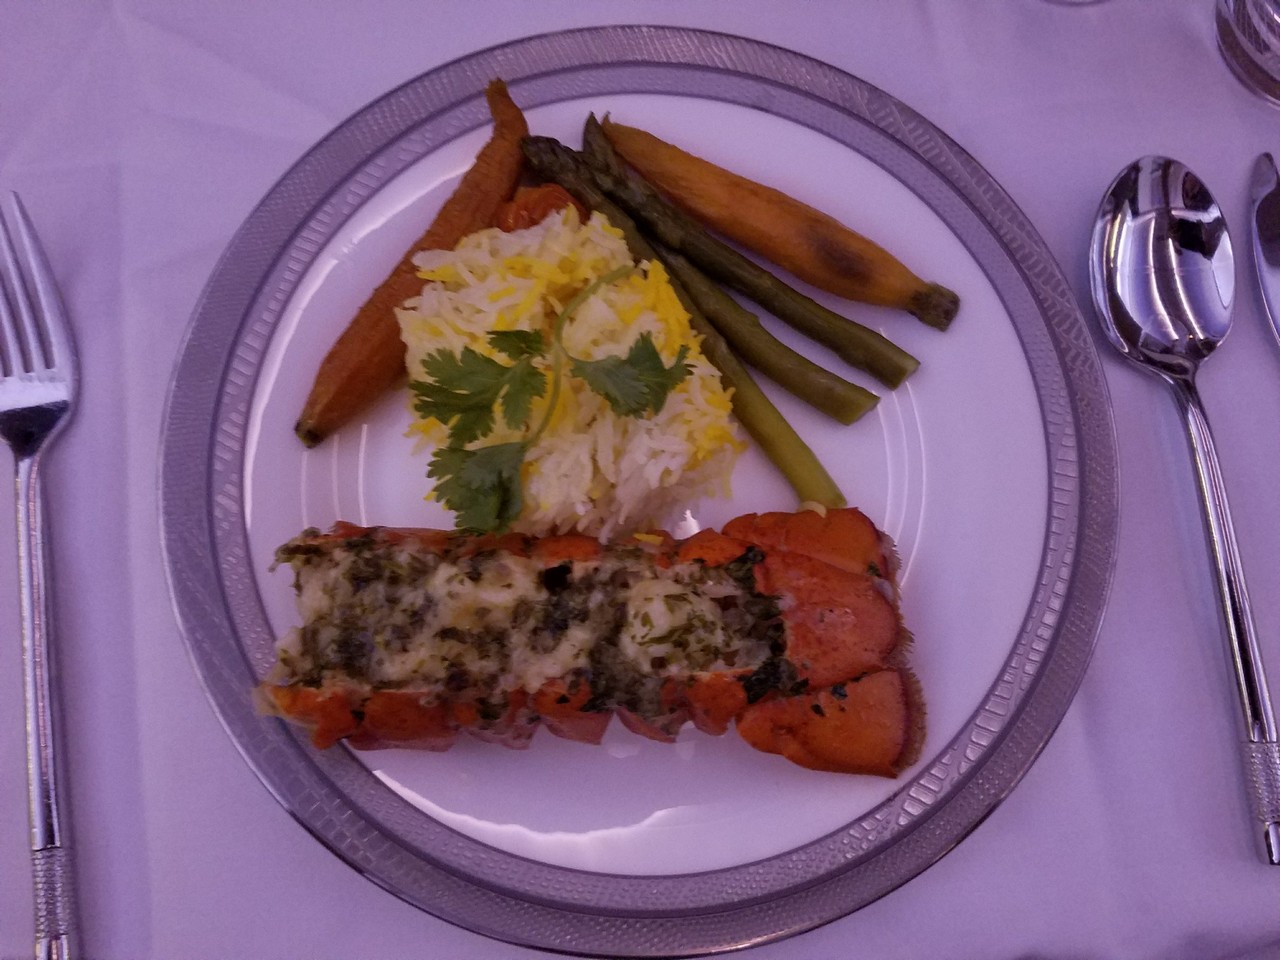 Lobster dinner 